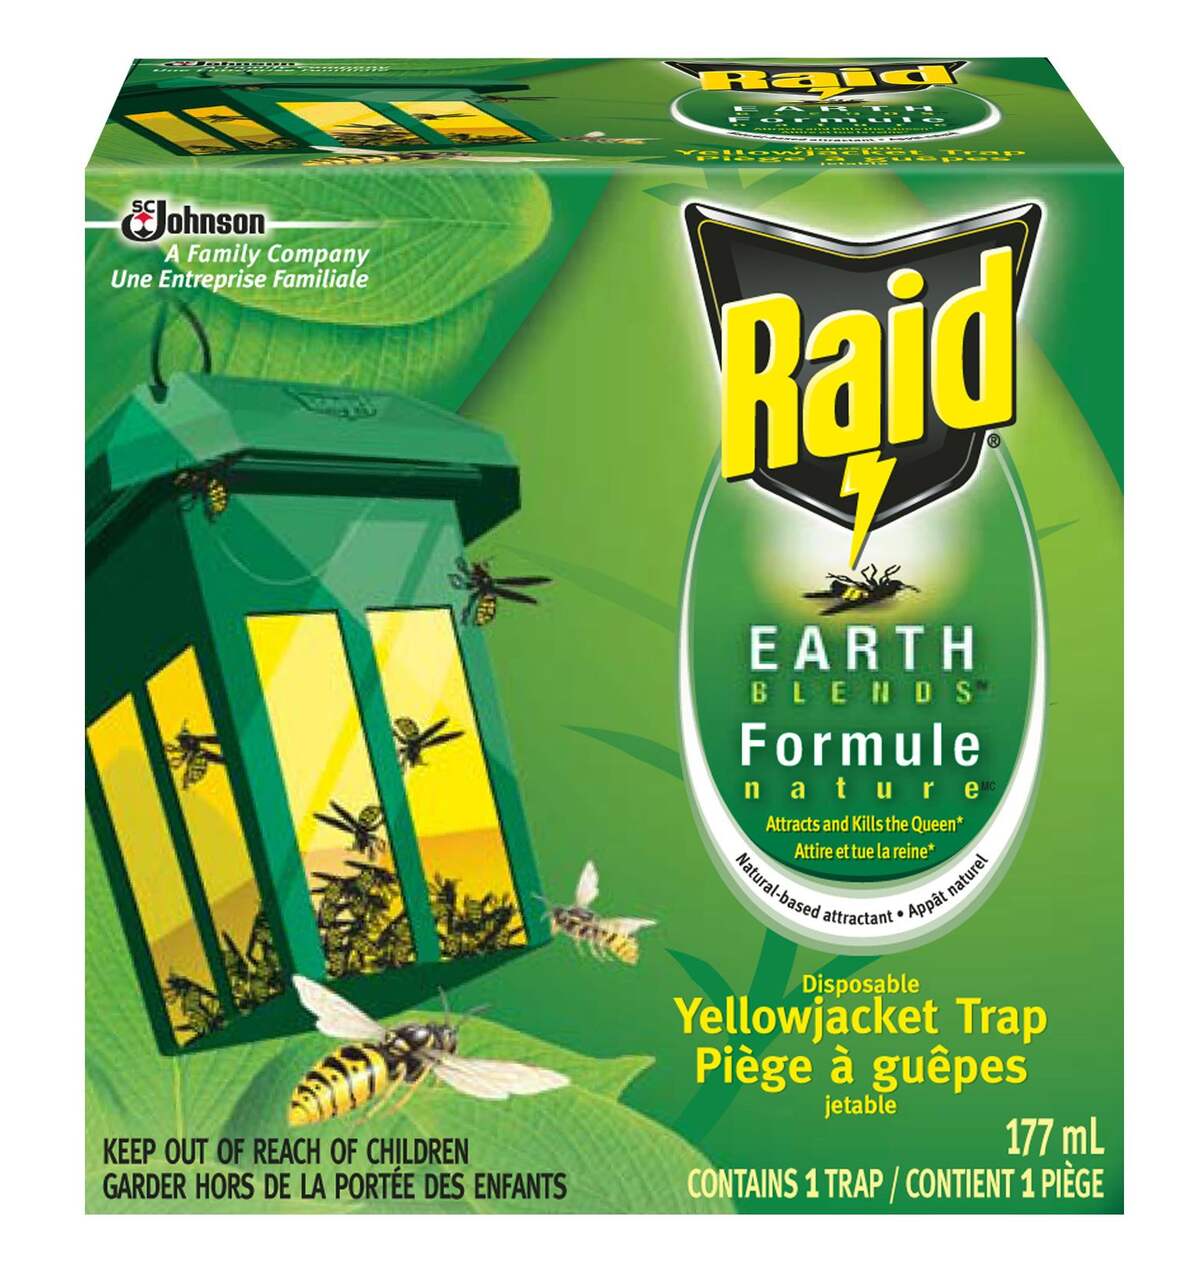 Raid Reusable Yellow Jacket, Wasp and Hornet Trap​ 